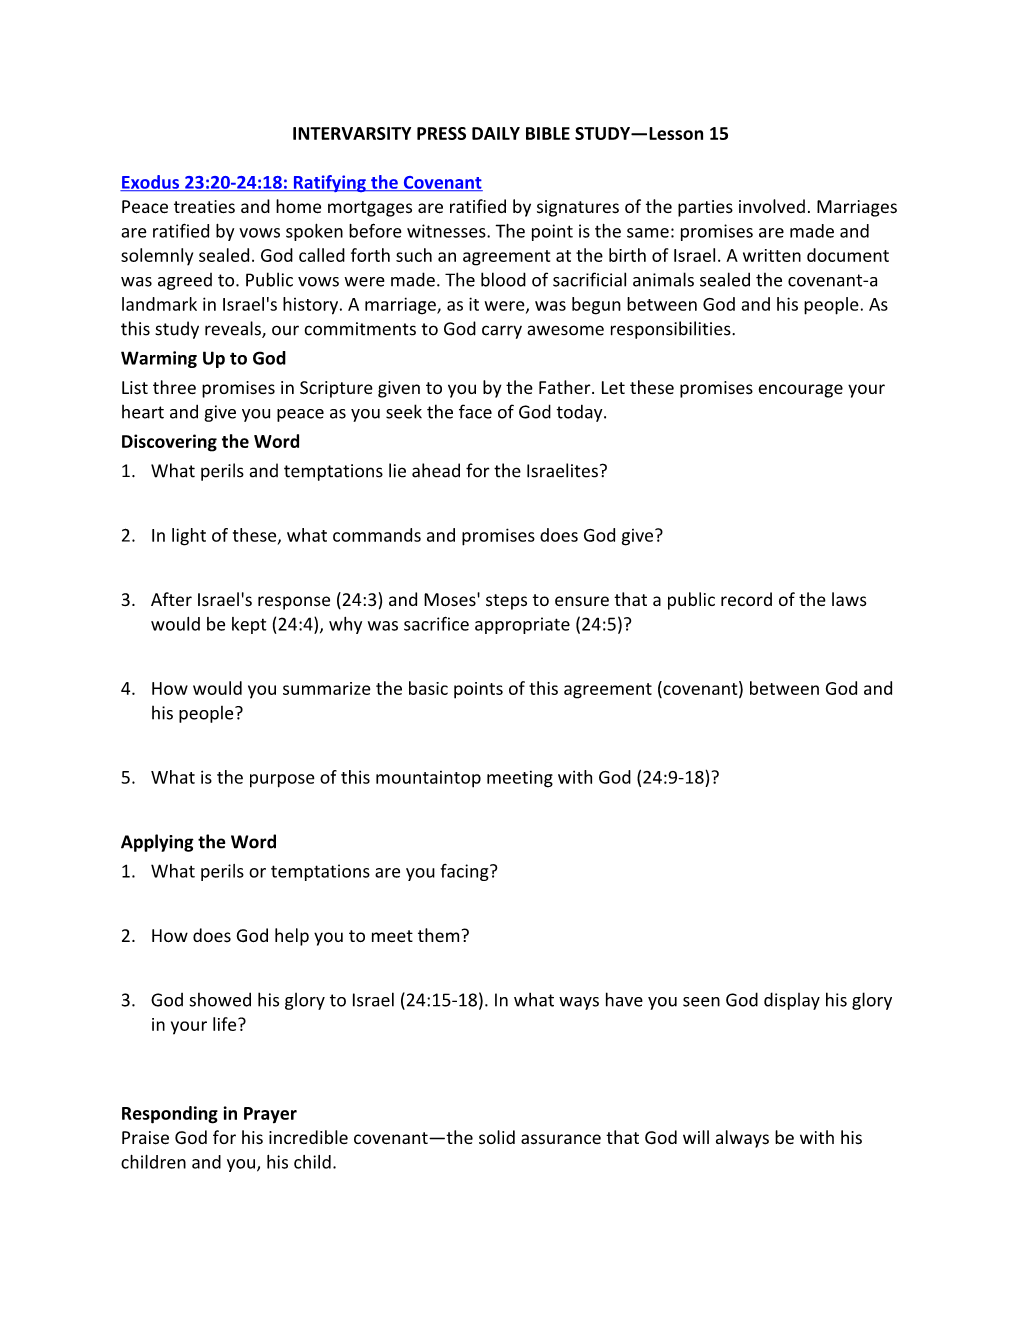 INTERVARSITY PRESS DAILY BIBLE STUDY Lesson 15